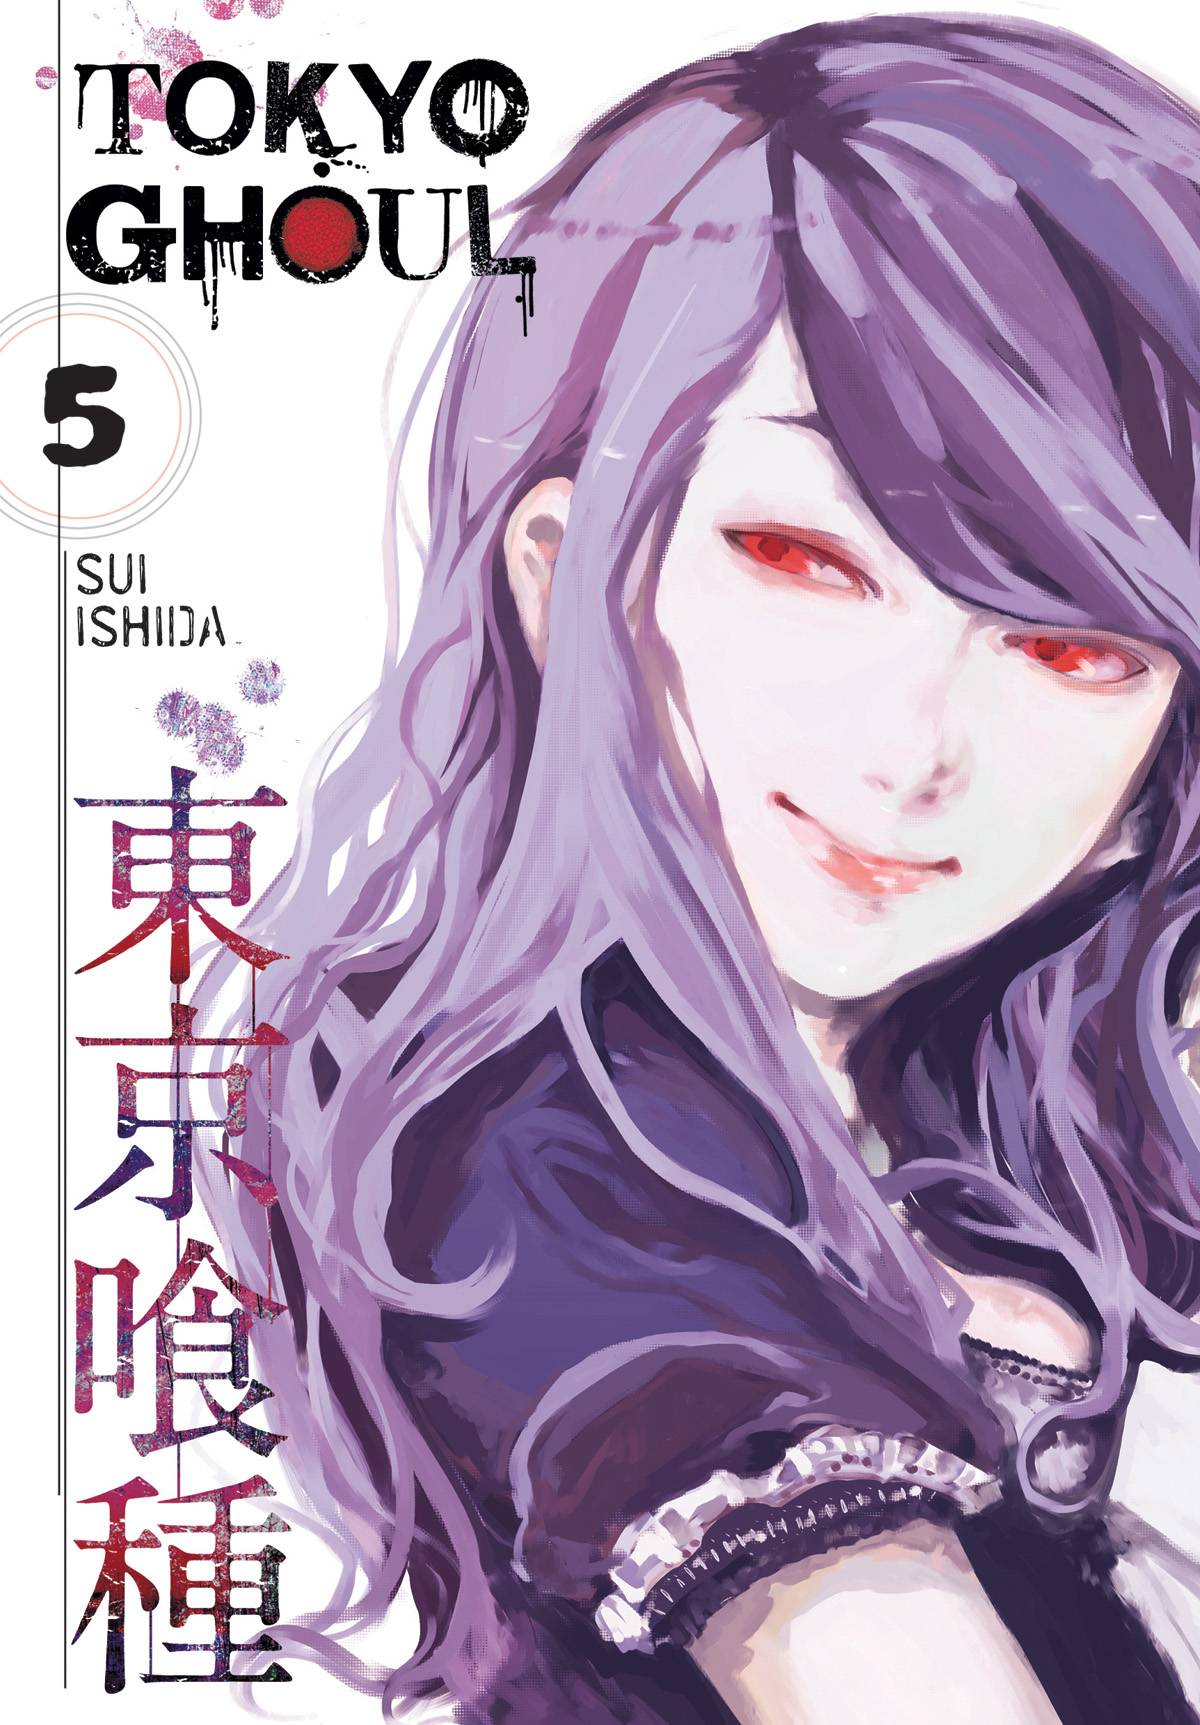 Tokyo Ghoul Manga Volume 5 (Mature)